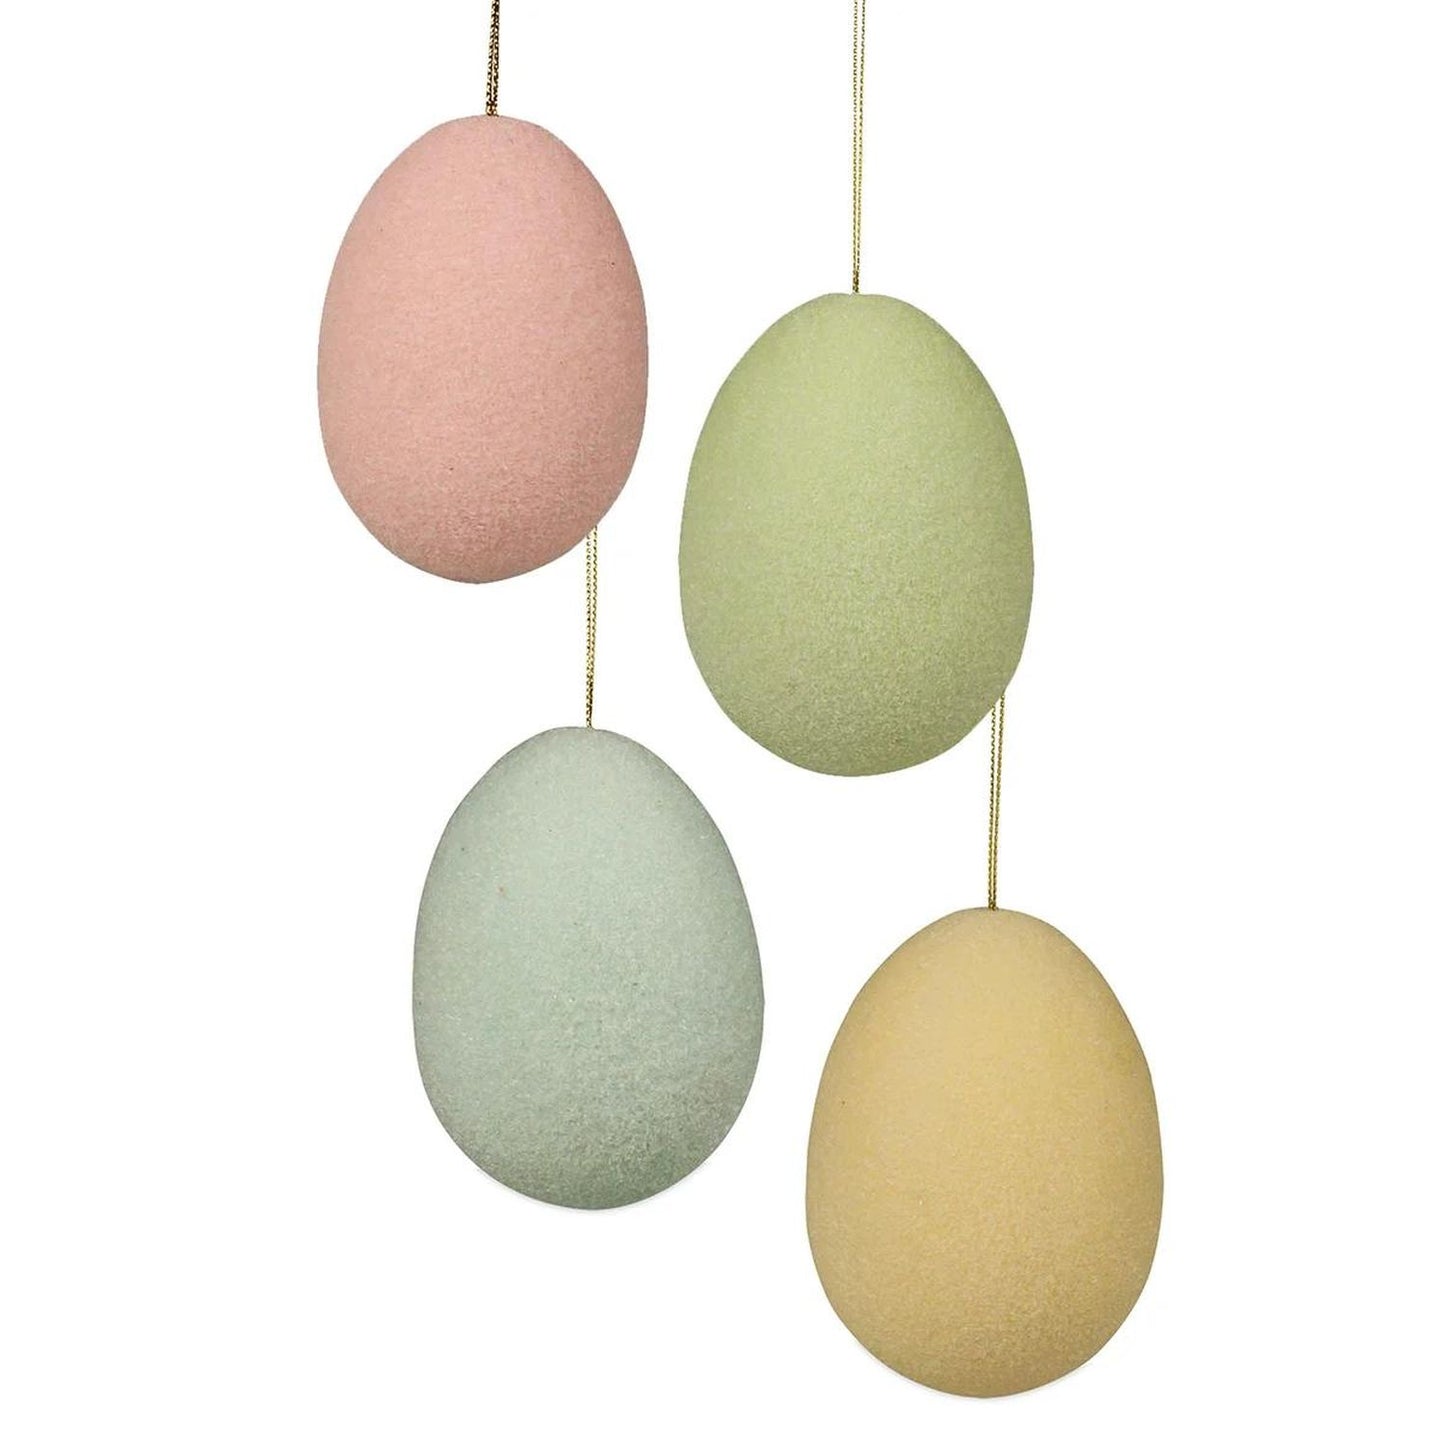 Bethany Lowe Spring Pastel Flocked Egg Ornament Large, Set Of 4, Assortment